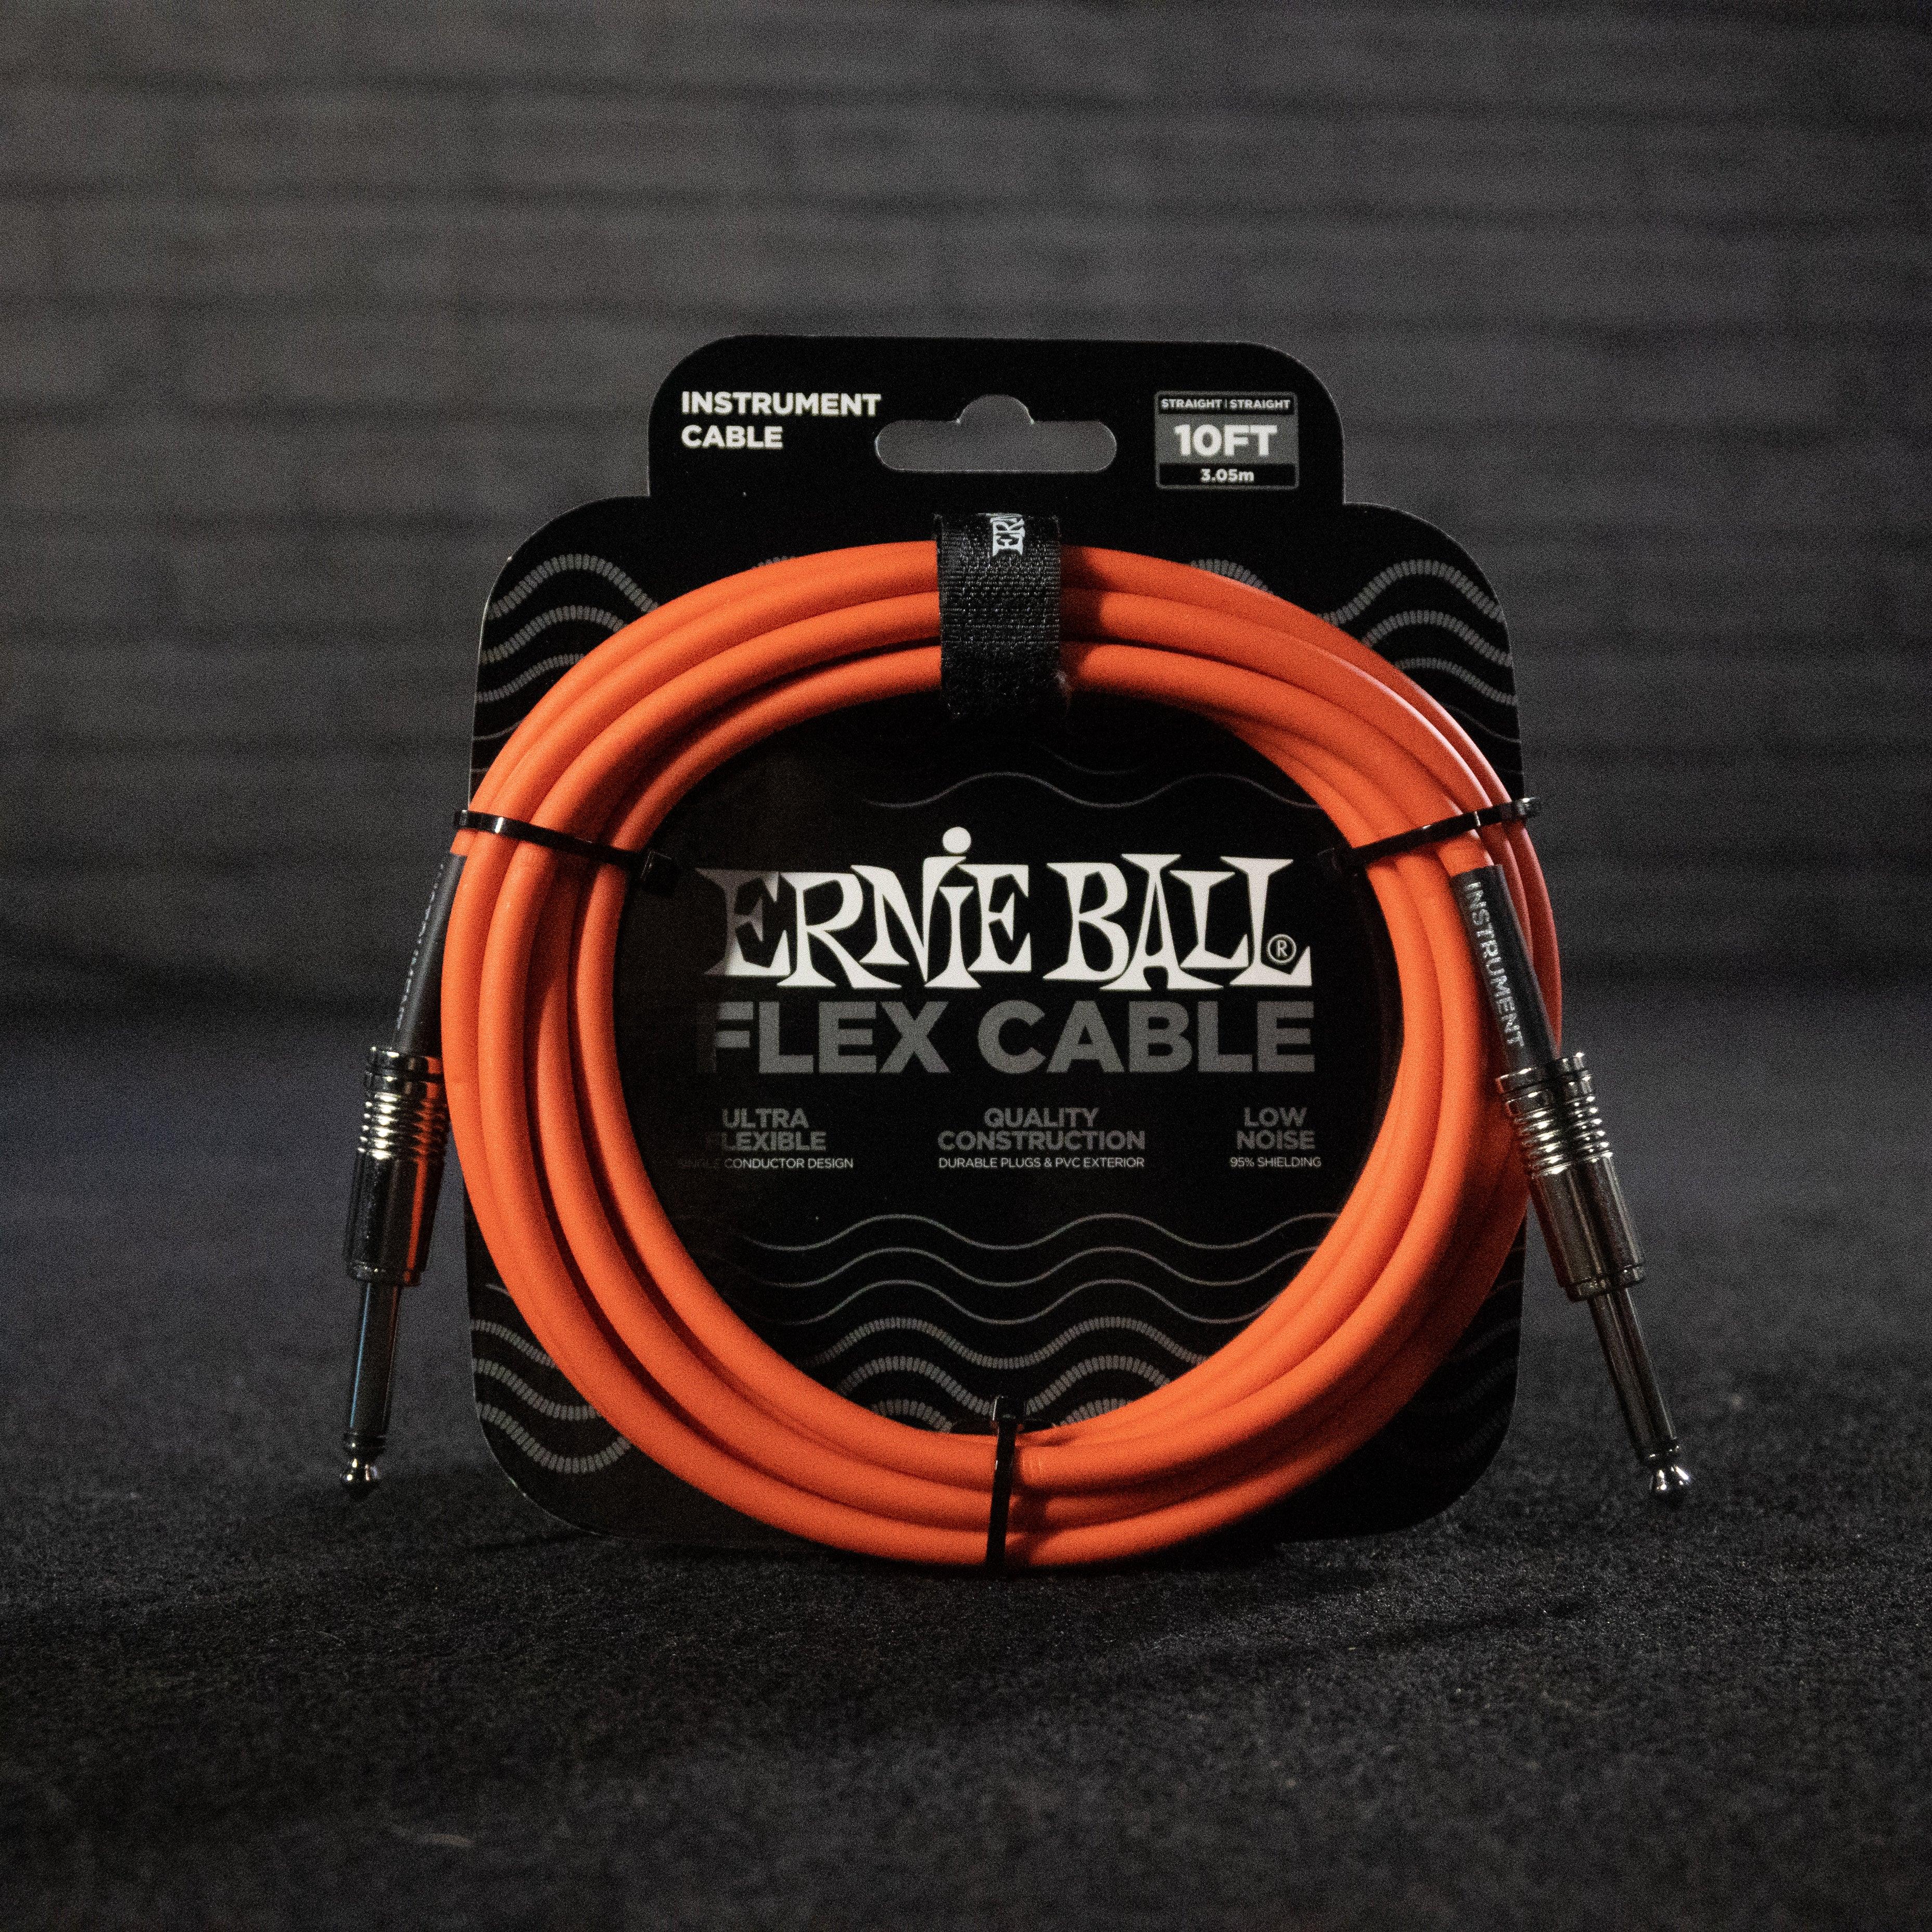 Ernie Ball Flex Instrument Cable Straight/Straight 10ft (Orange) - Impulse Music Co.